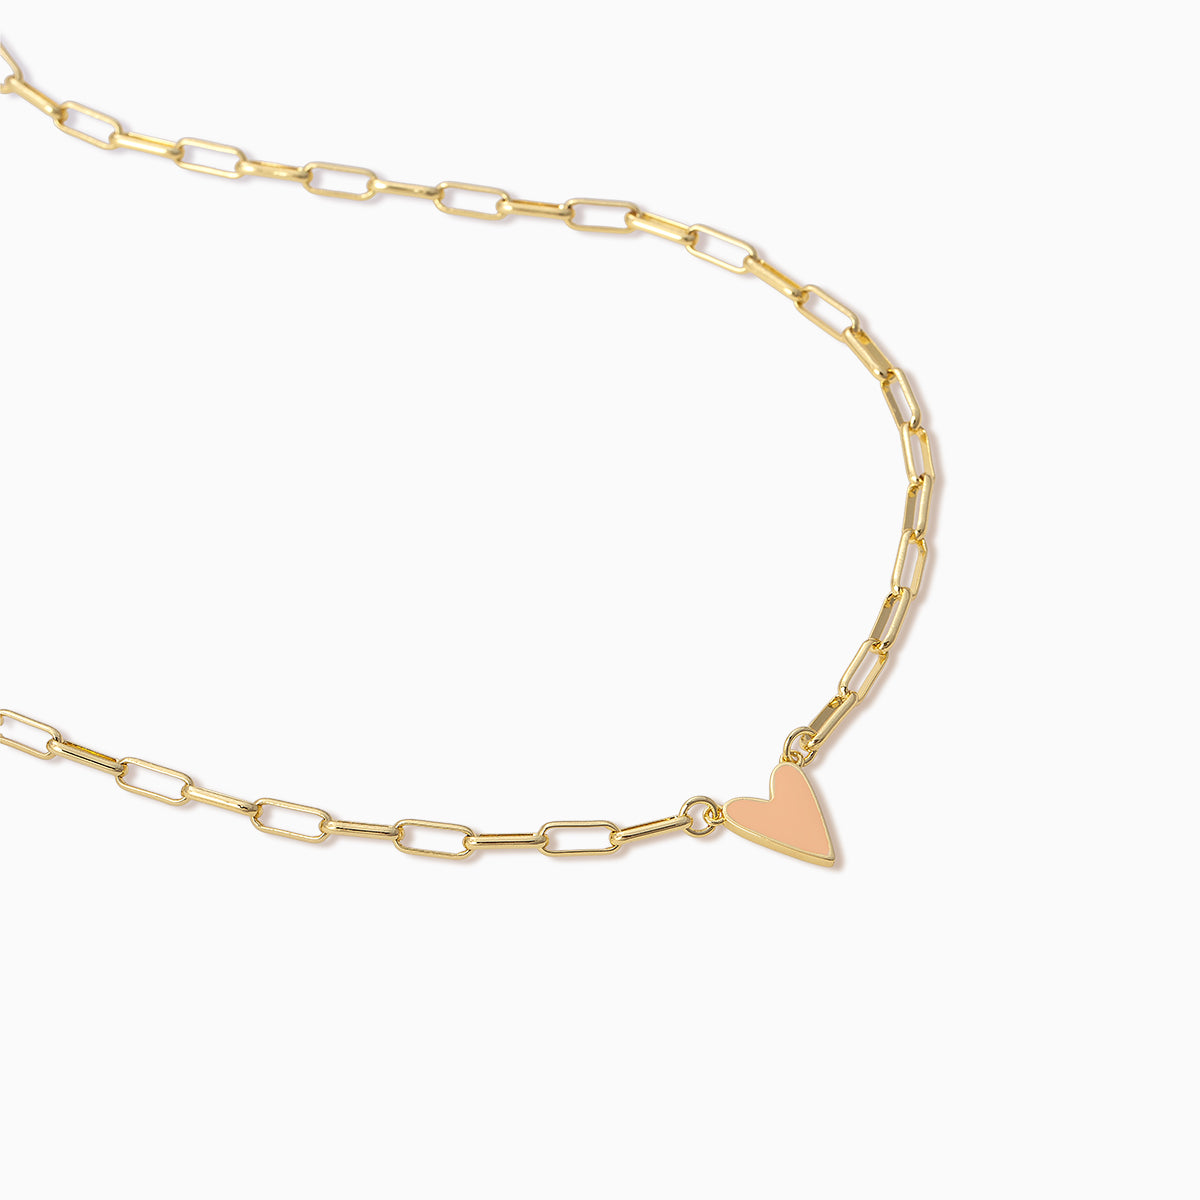 Enamel Heart Necklace | Blush | Product Detail Image | Uncommon James